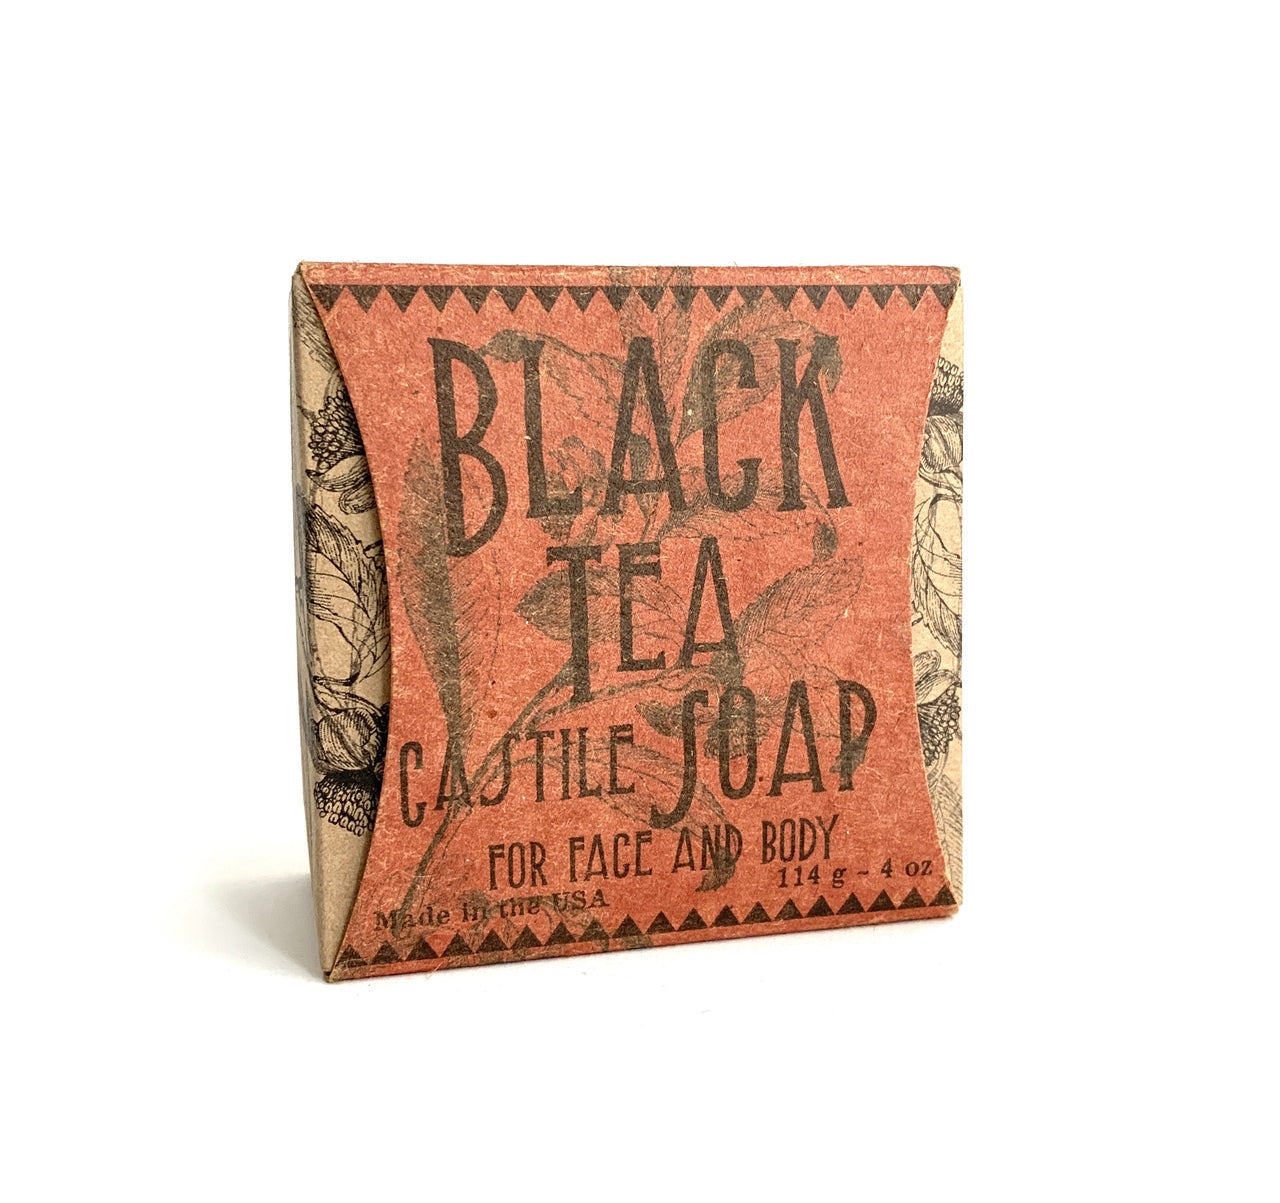 Black Tea Castile Soap